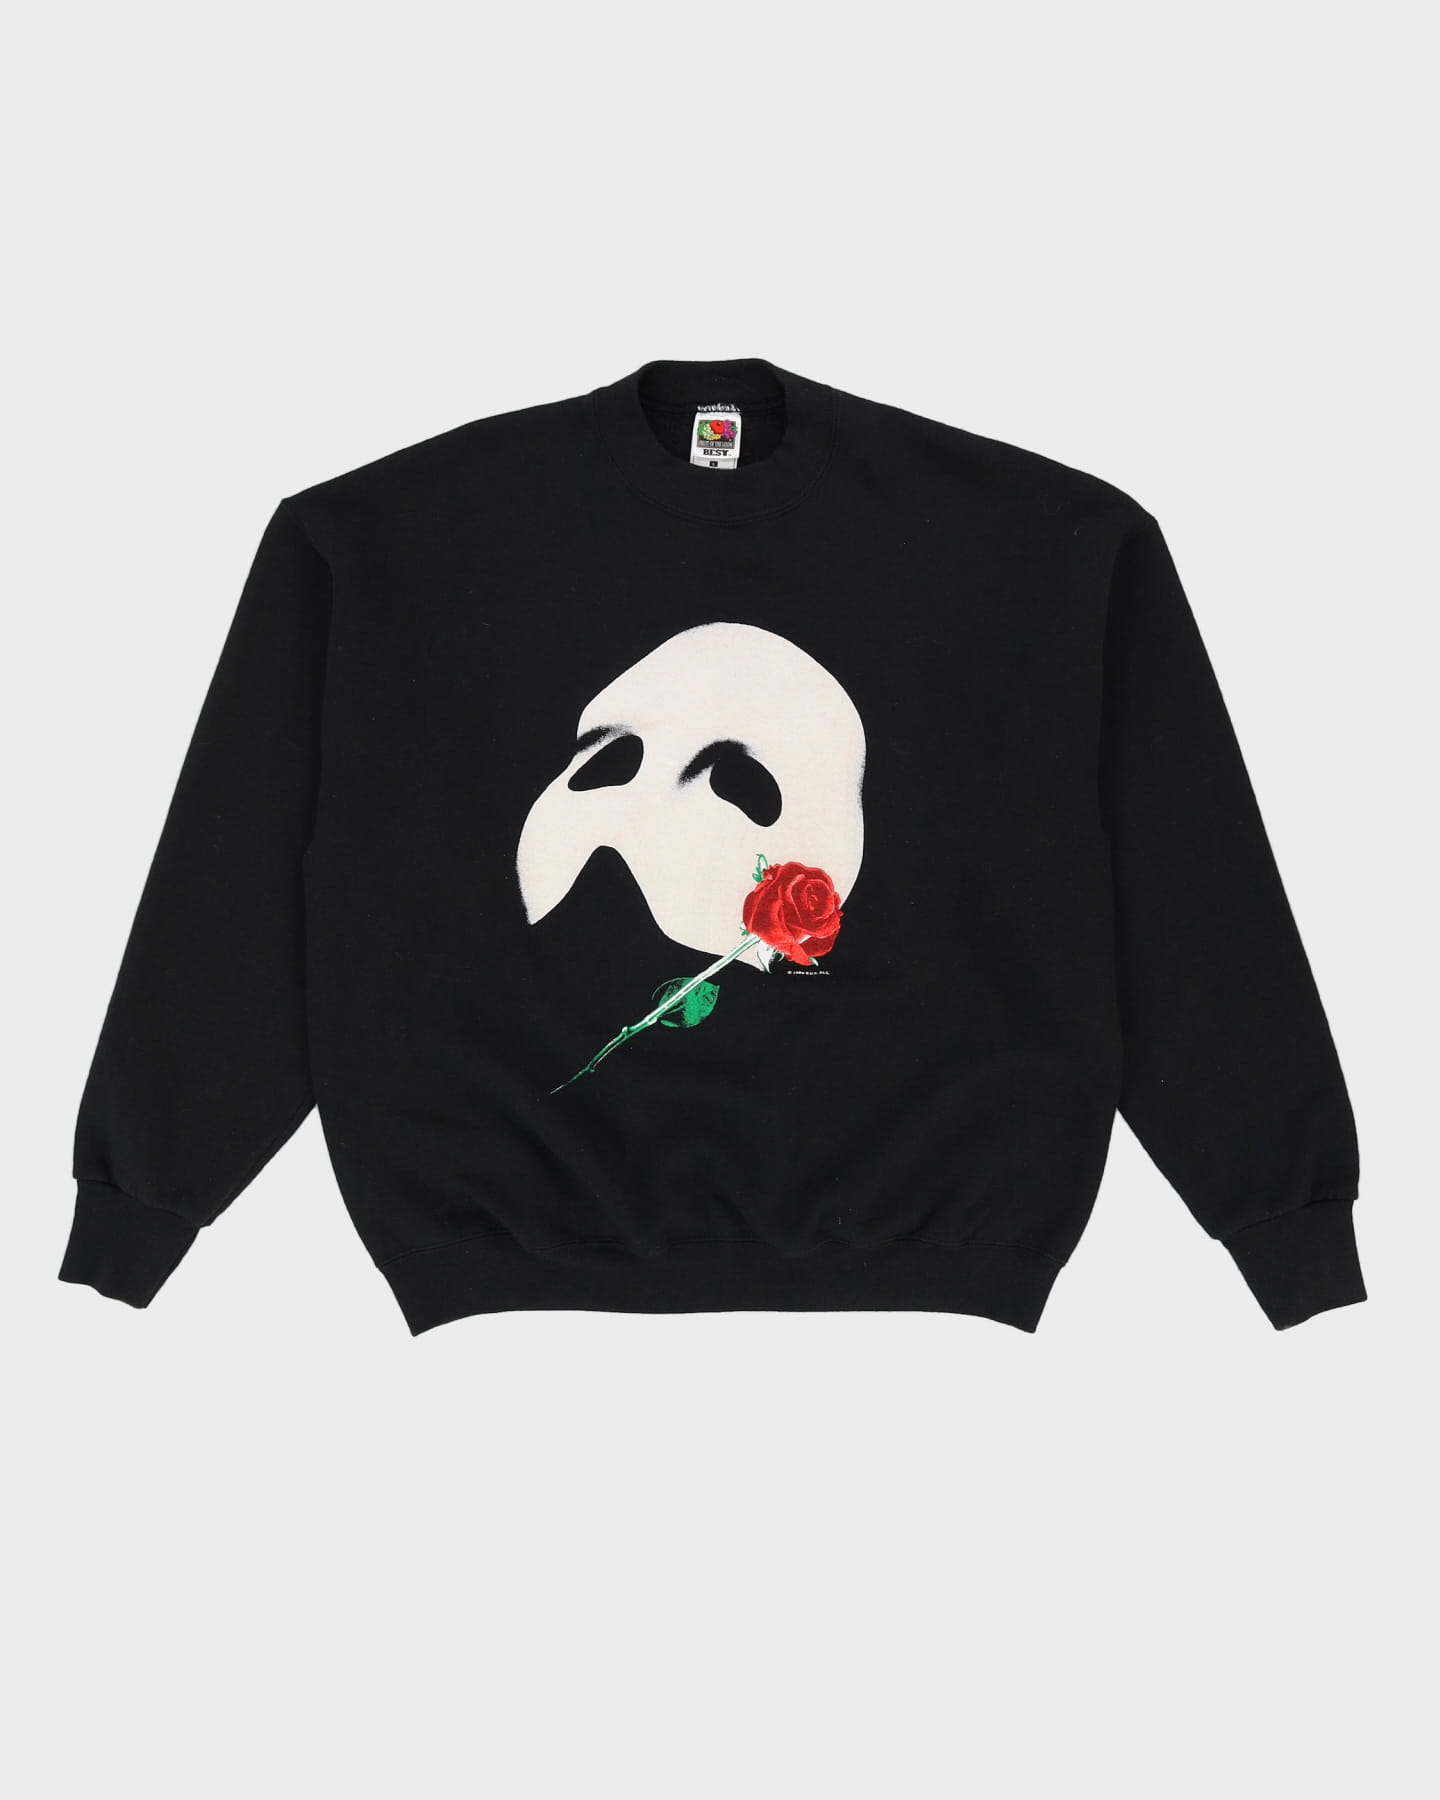 90s Phantom Of The Opera Black Sweatshirt - L